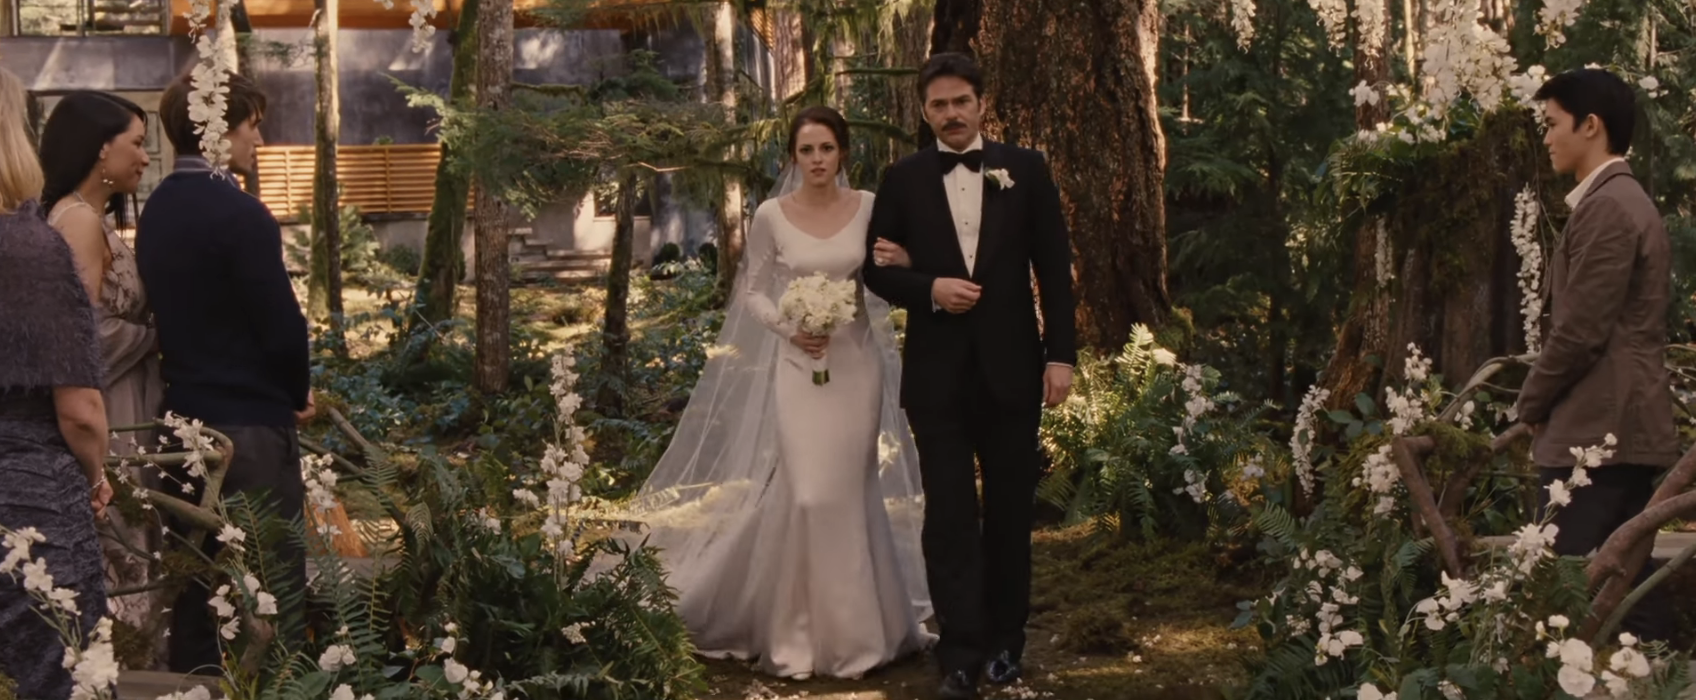 Twilight Wedding Dress – Get the Look | Twilight wedding dresses, Celebrity  wedding dresses, Twilight wedding